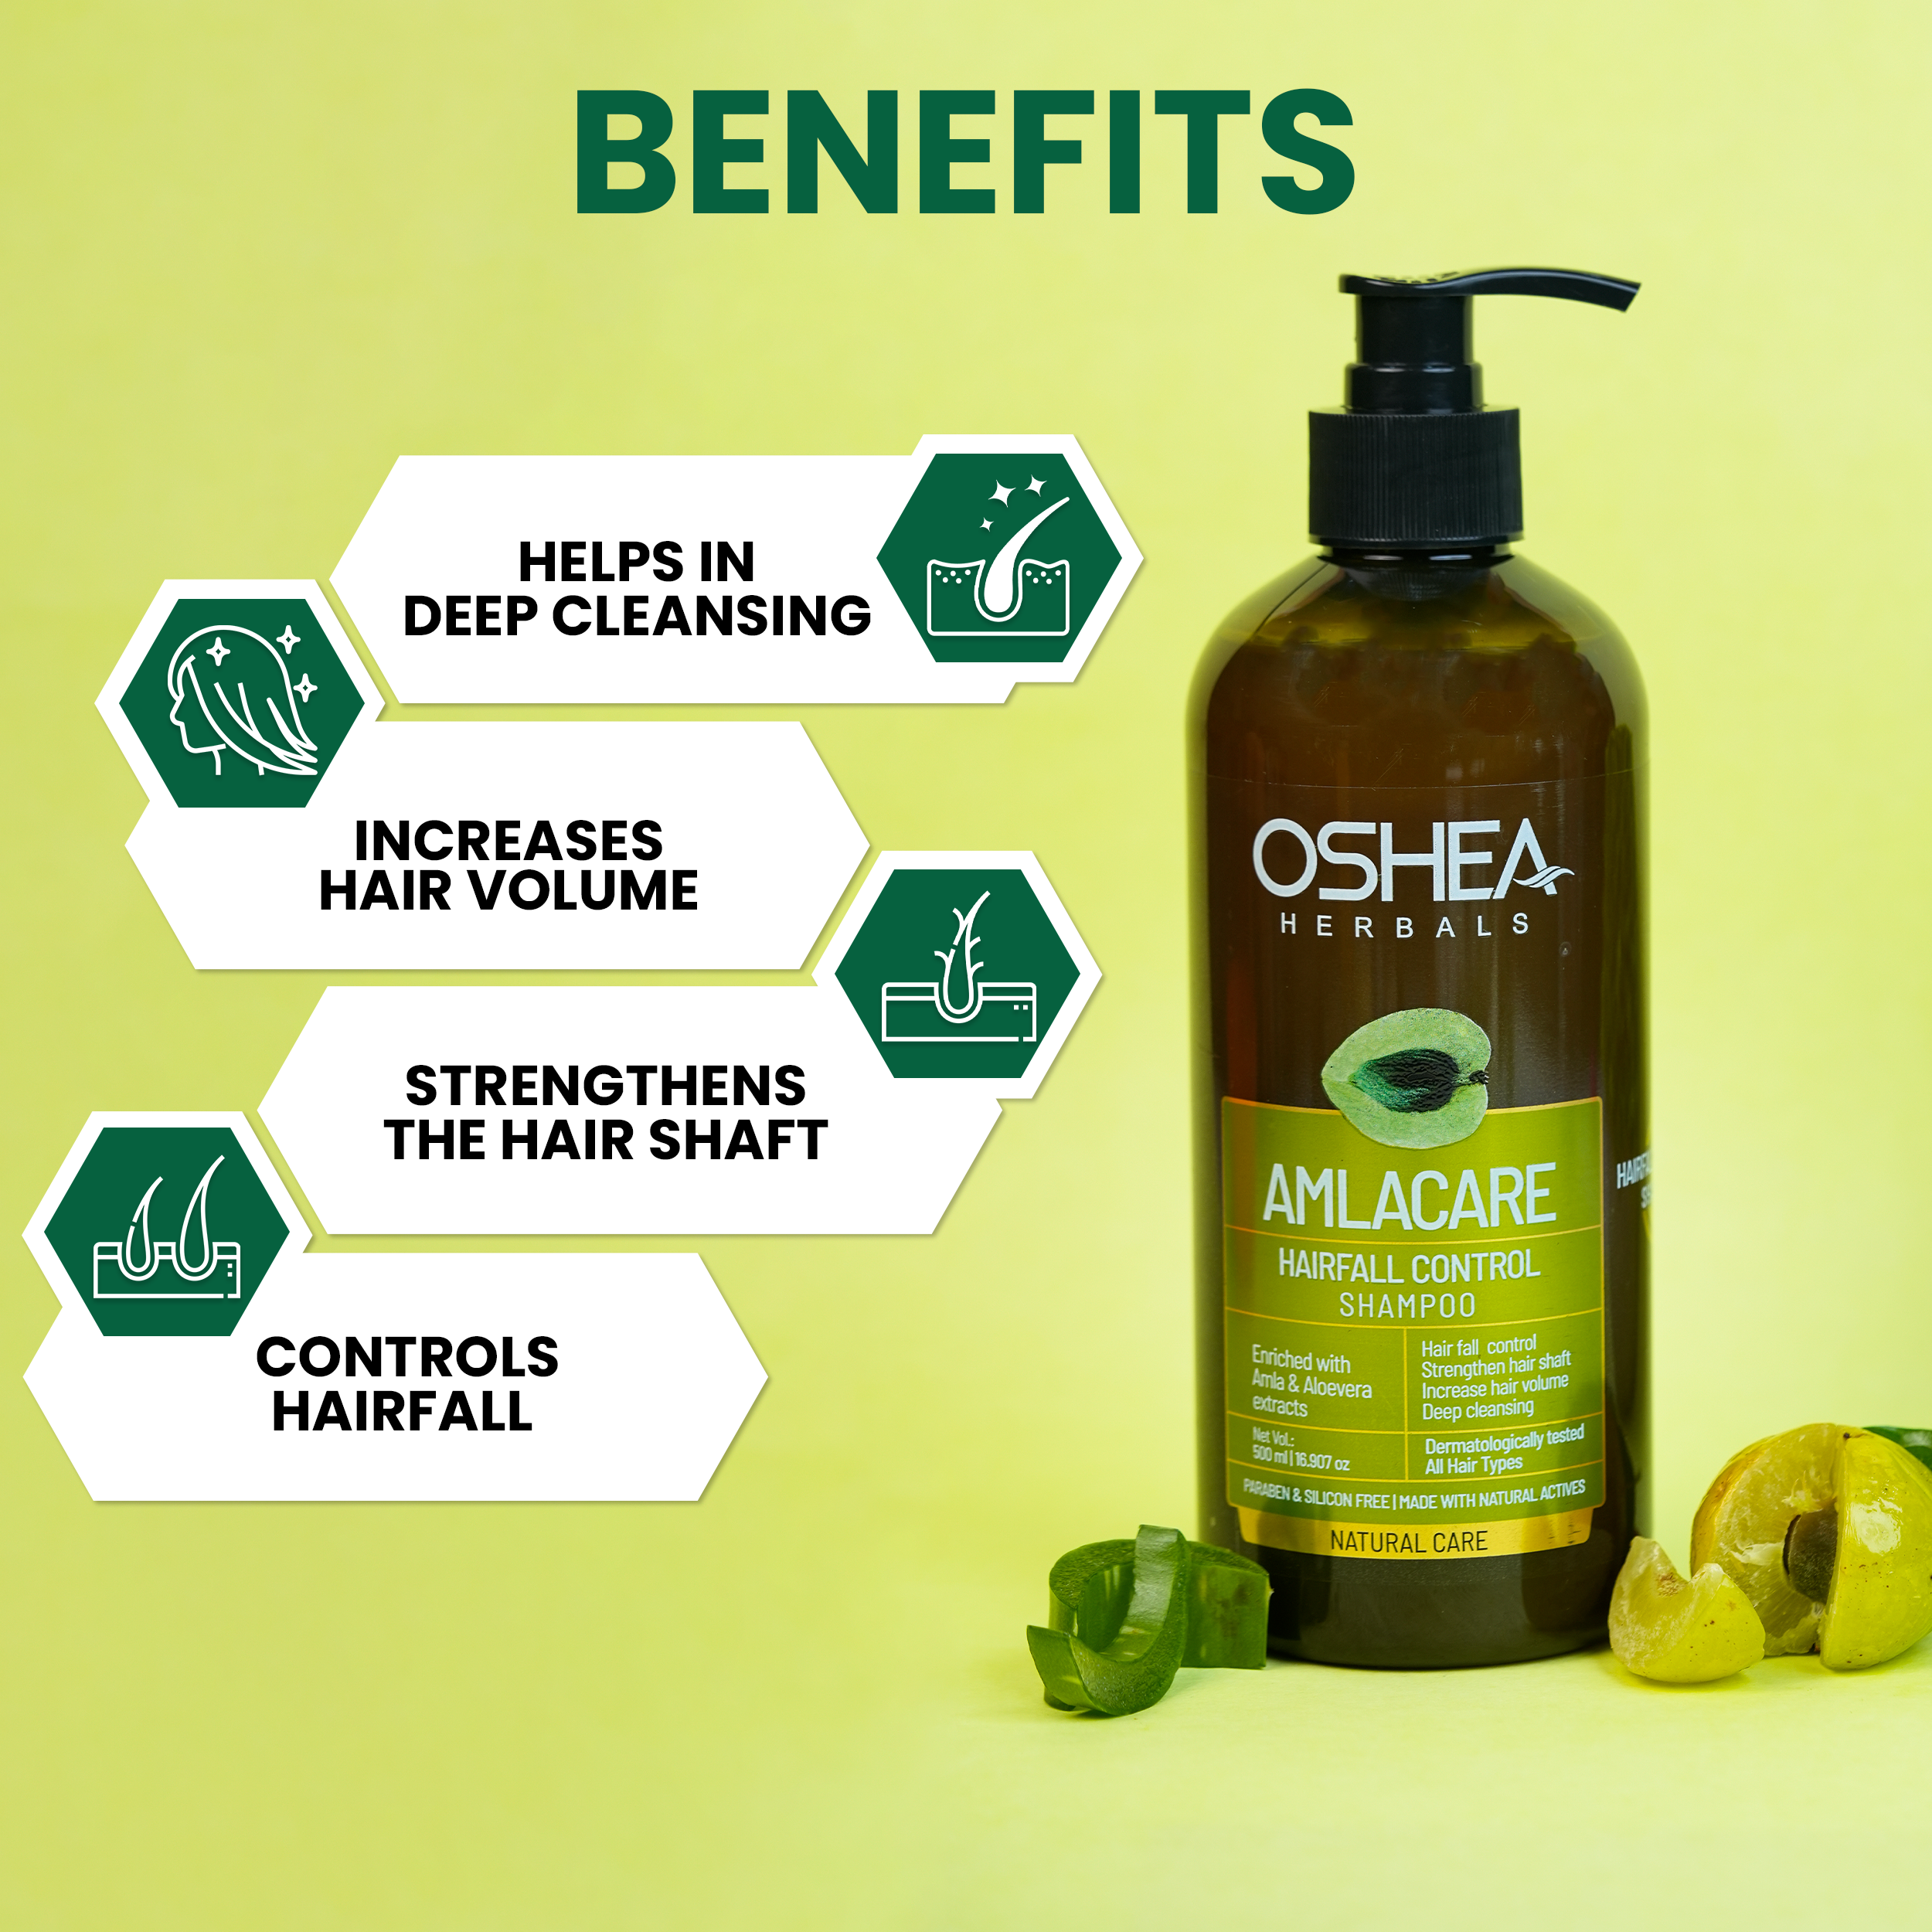 Benefits AmlaCare Hairfall control Shampoo Oshea Herbals